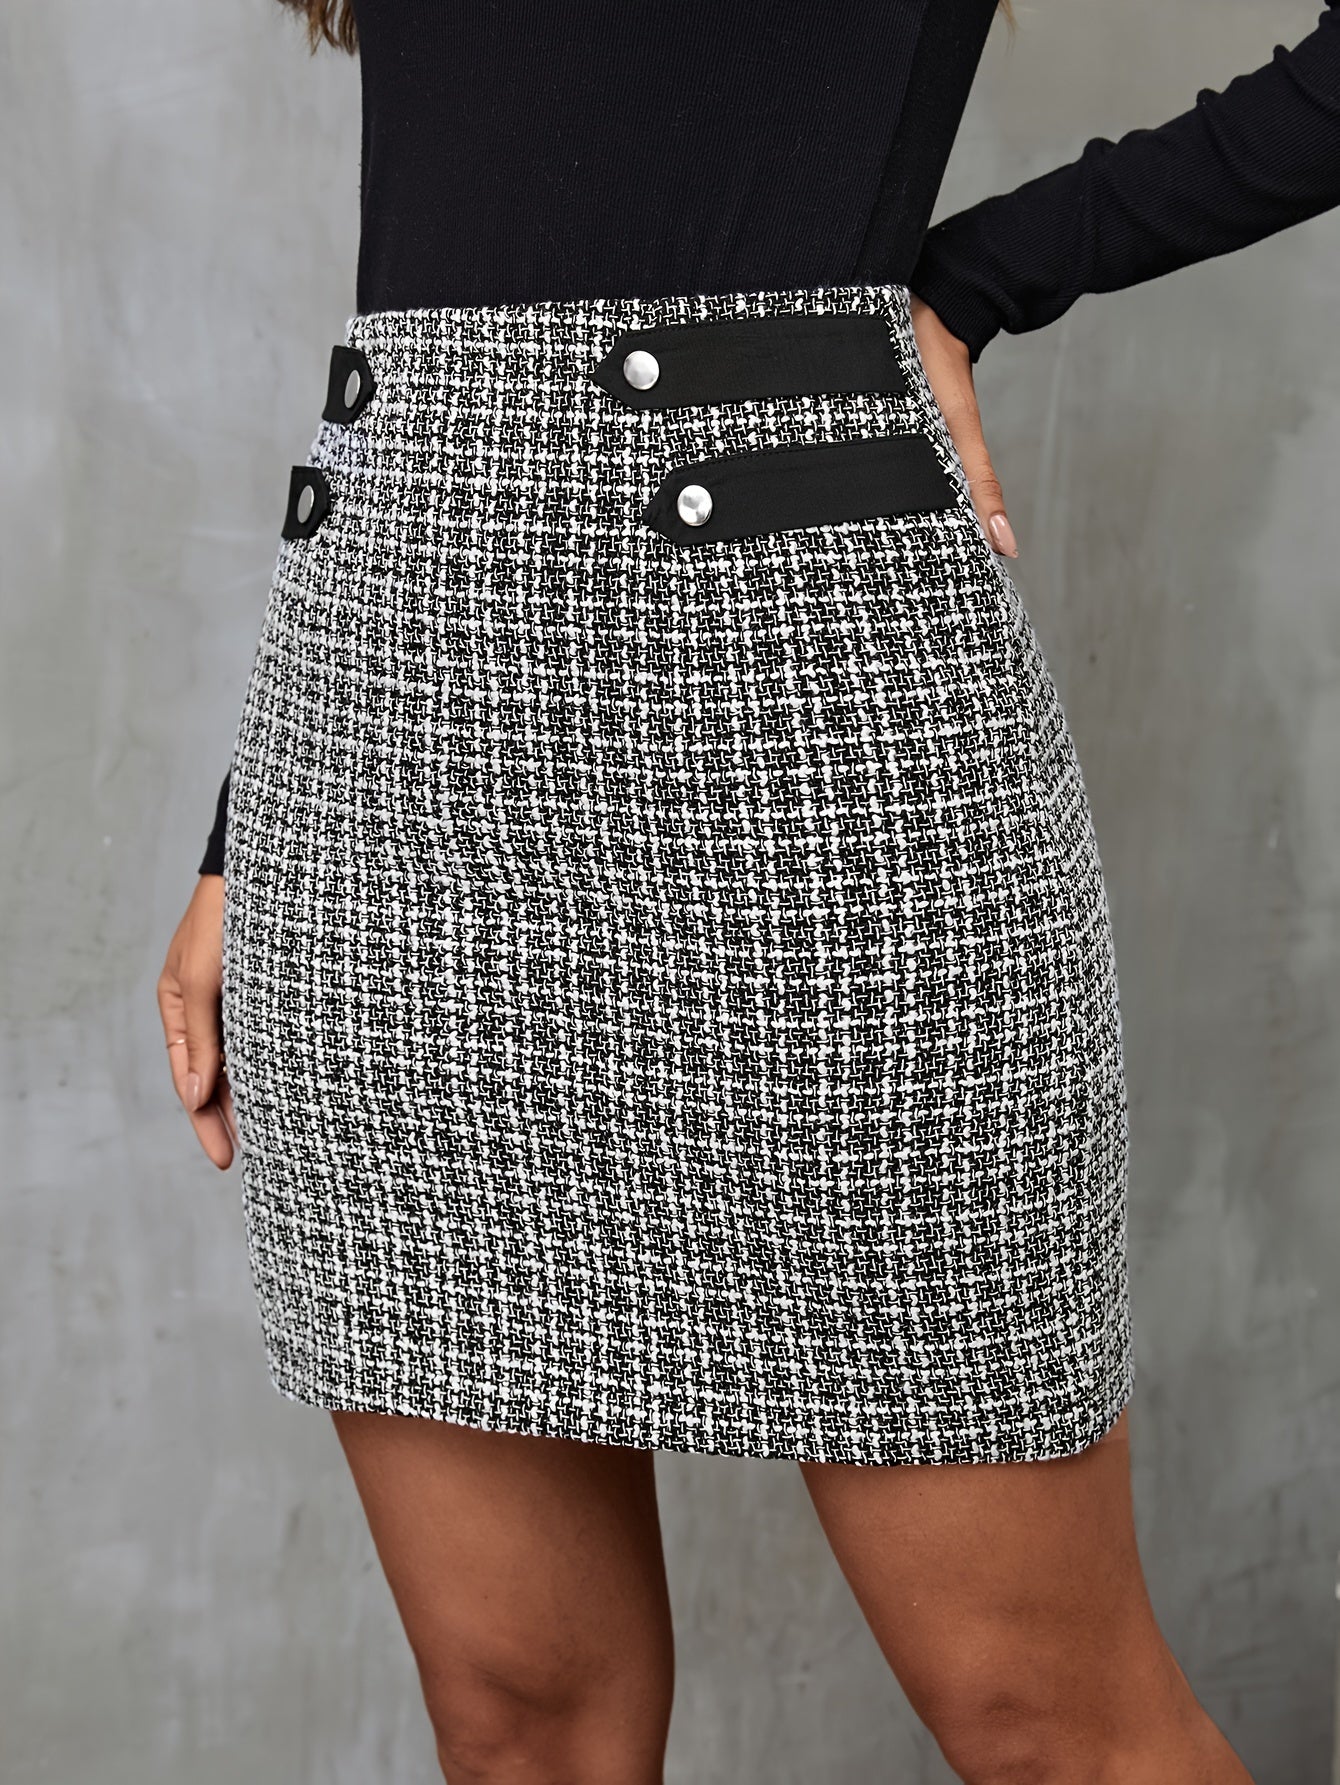 Antmvs Houndstooth Pattern Button Decor Skirt, Elegant Bodycon Skirt For Spring & Fall, Women's Clothing